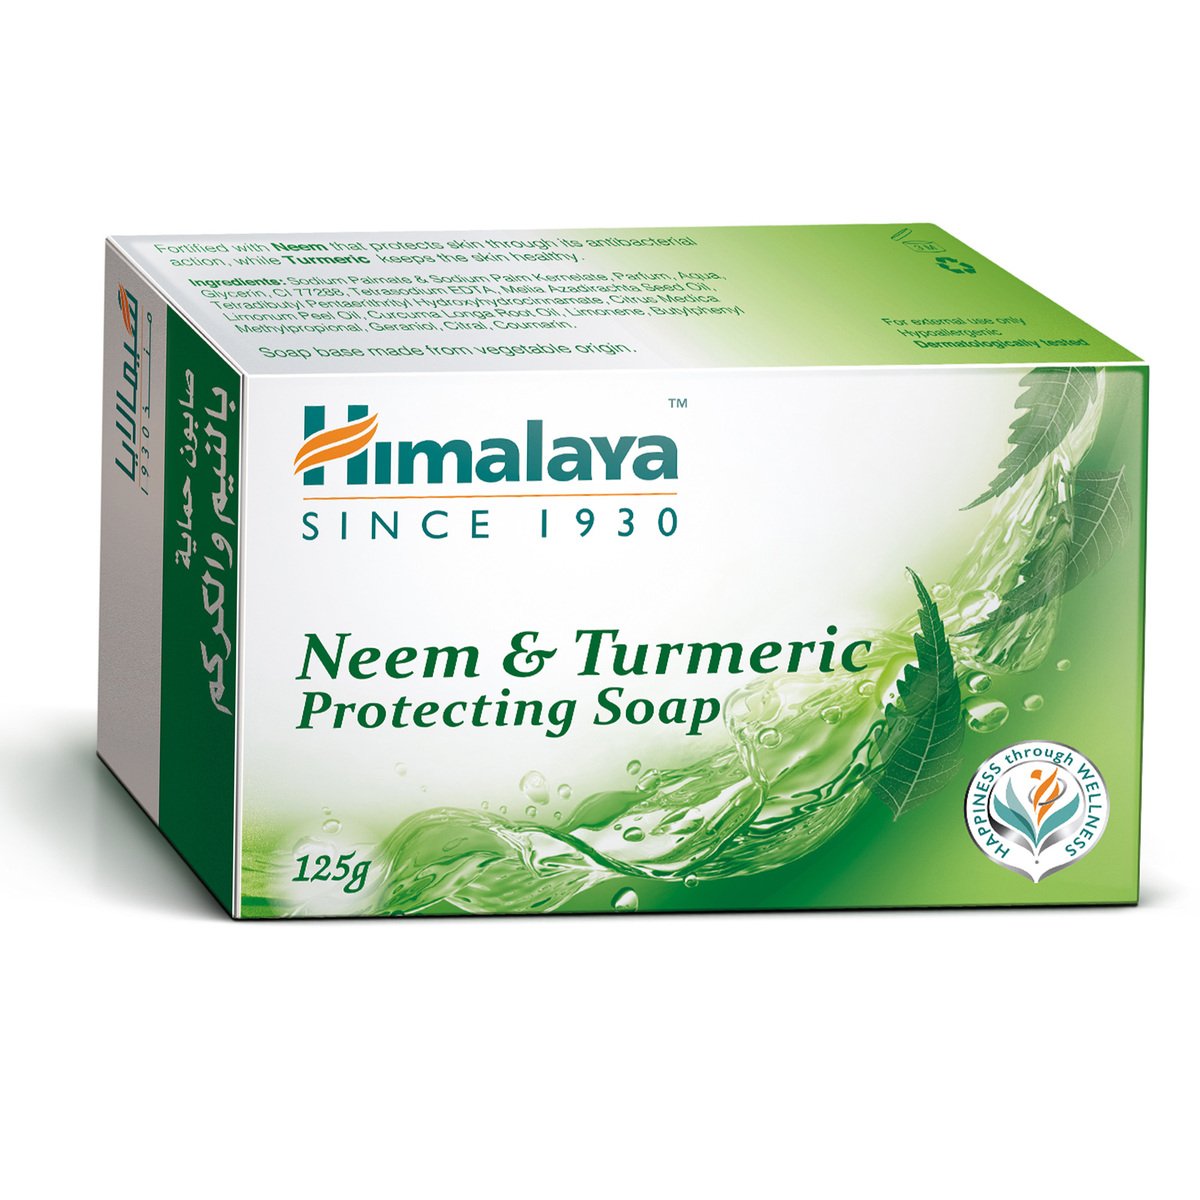 Himalaya Soap Protecting Neem & Turmeric 125 g